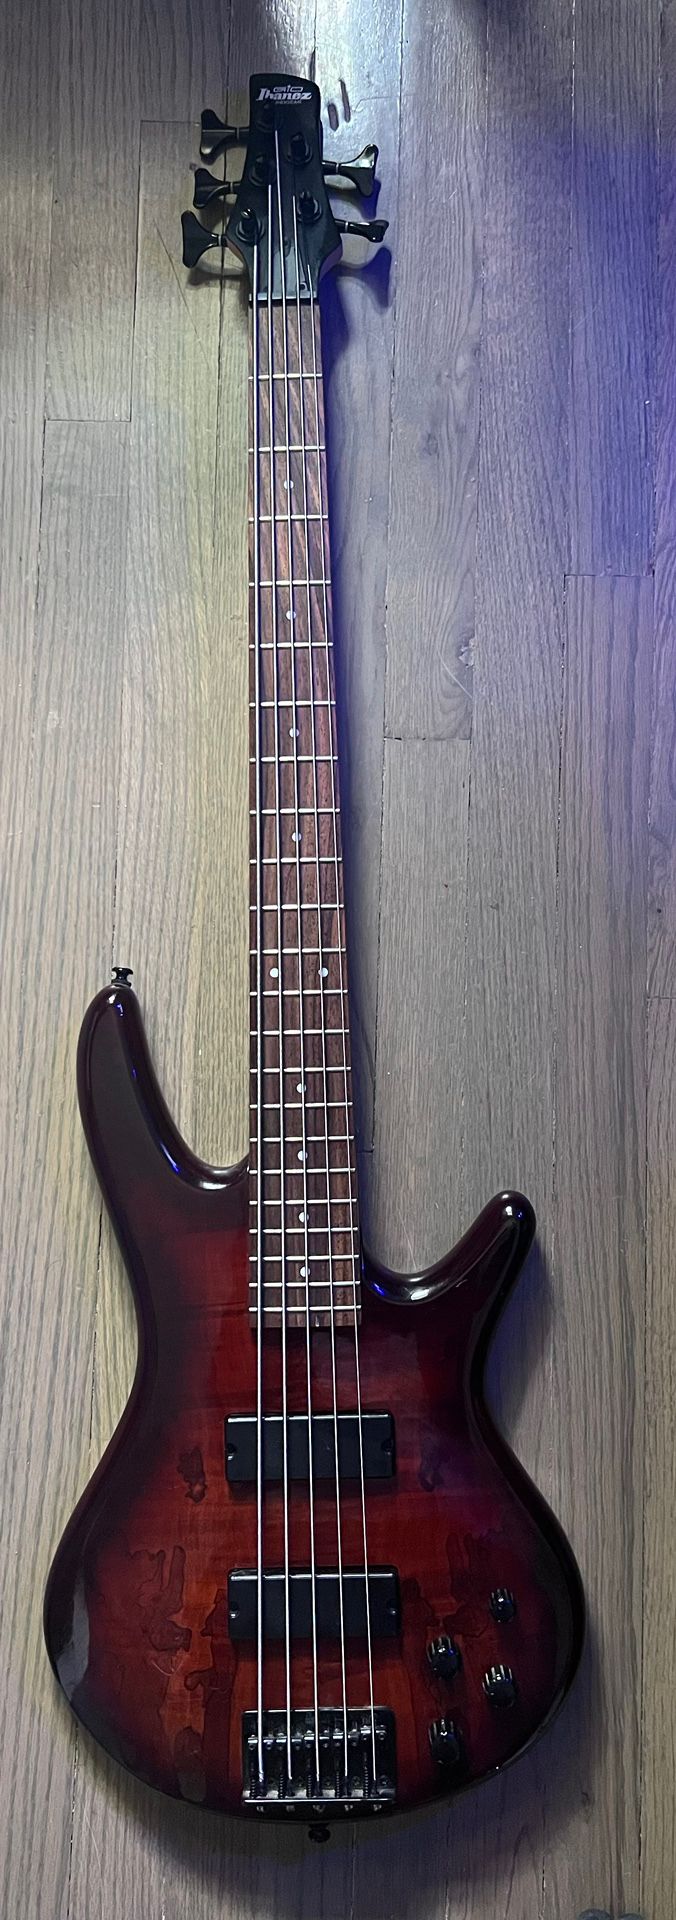 Ibanez 5 String Bass Guitar 